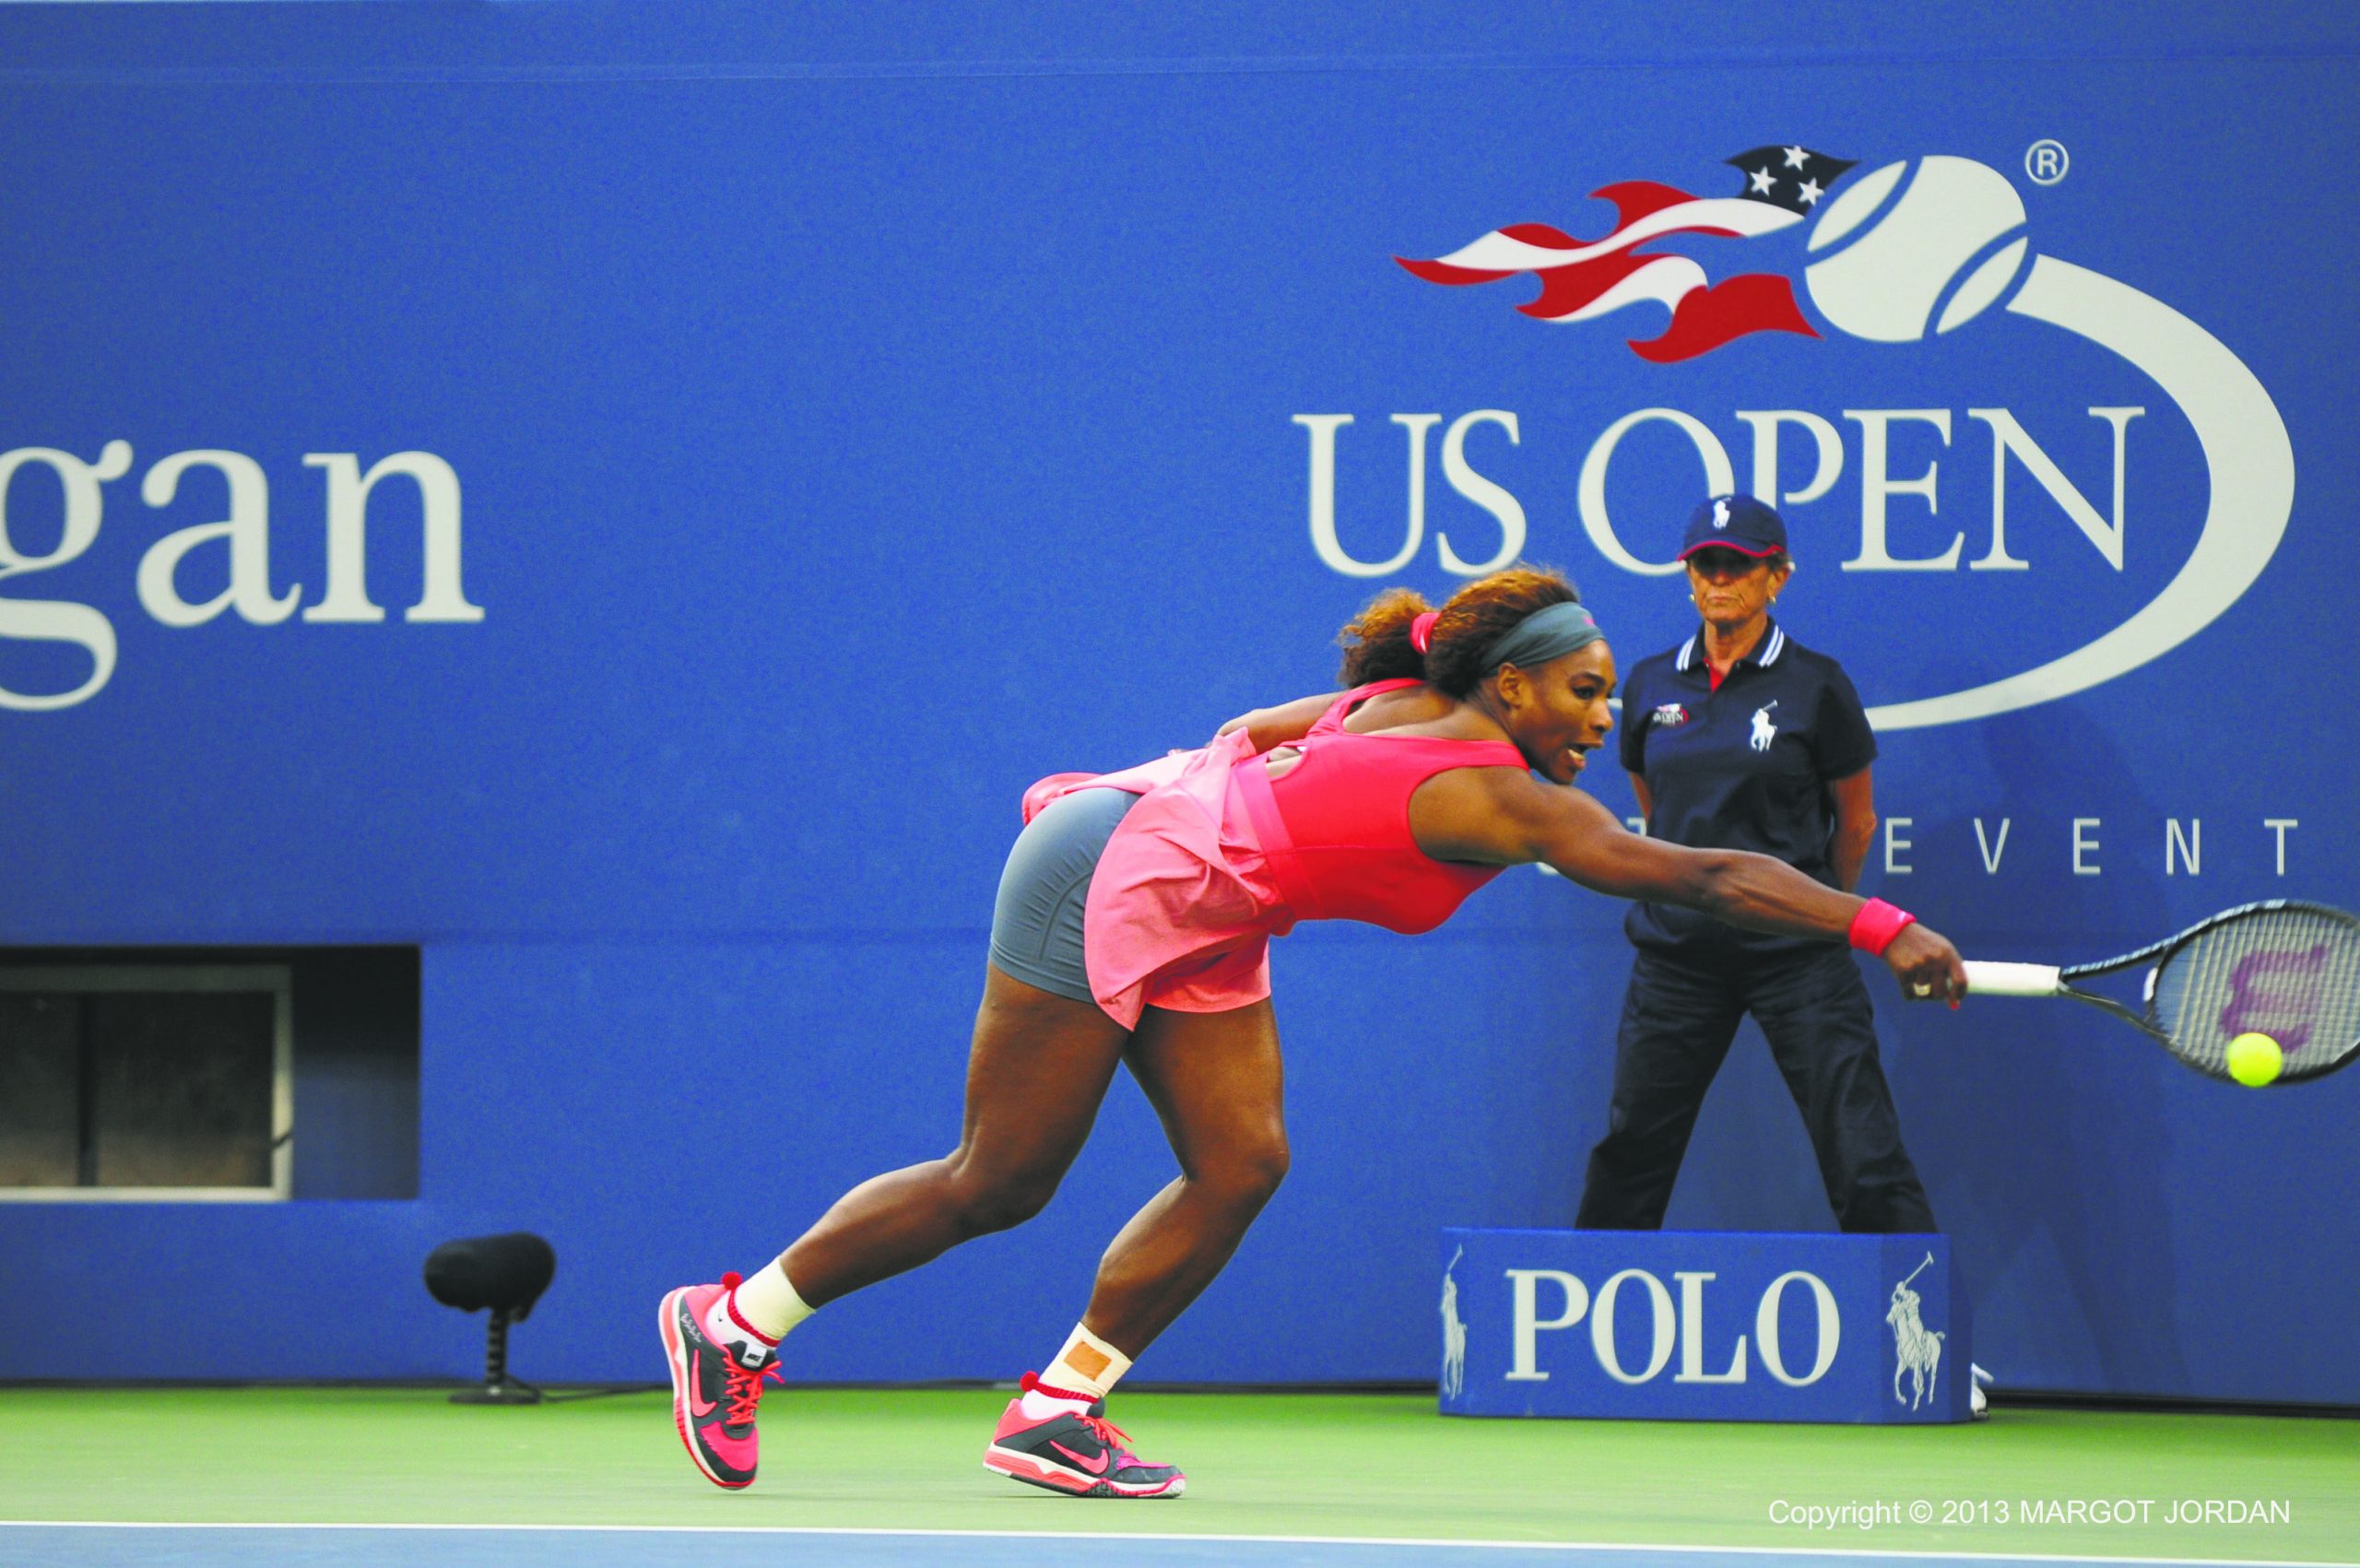 Serena at night, Medvedev starts defense on US Open’s Day 1